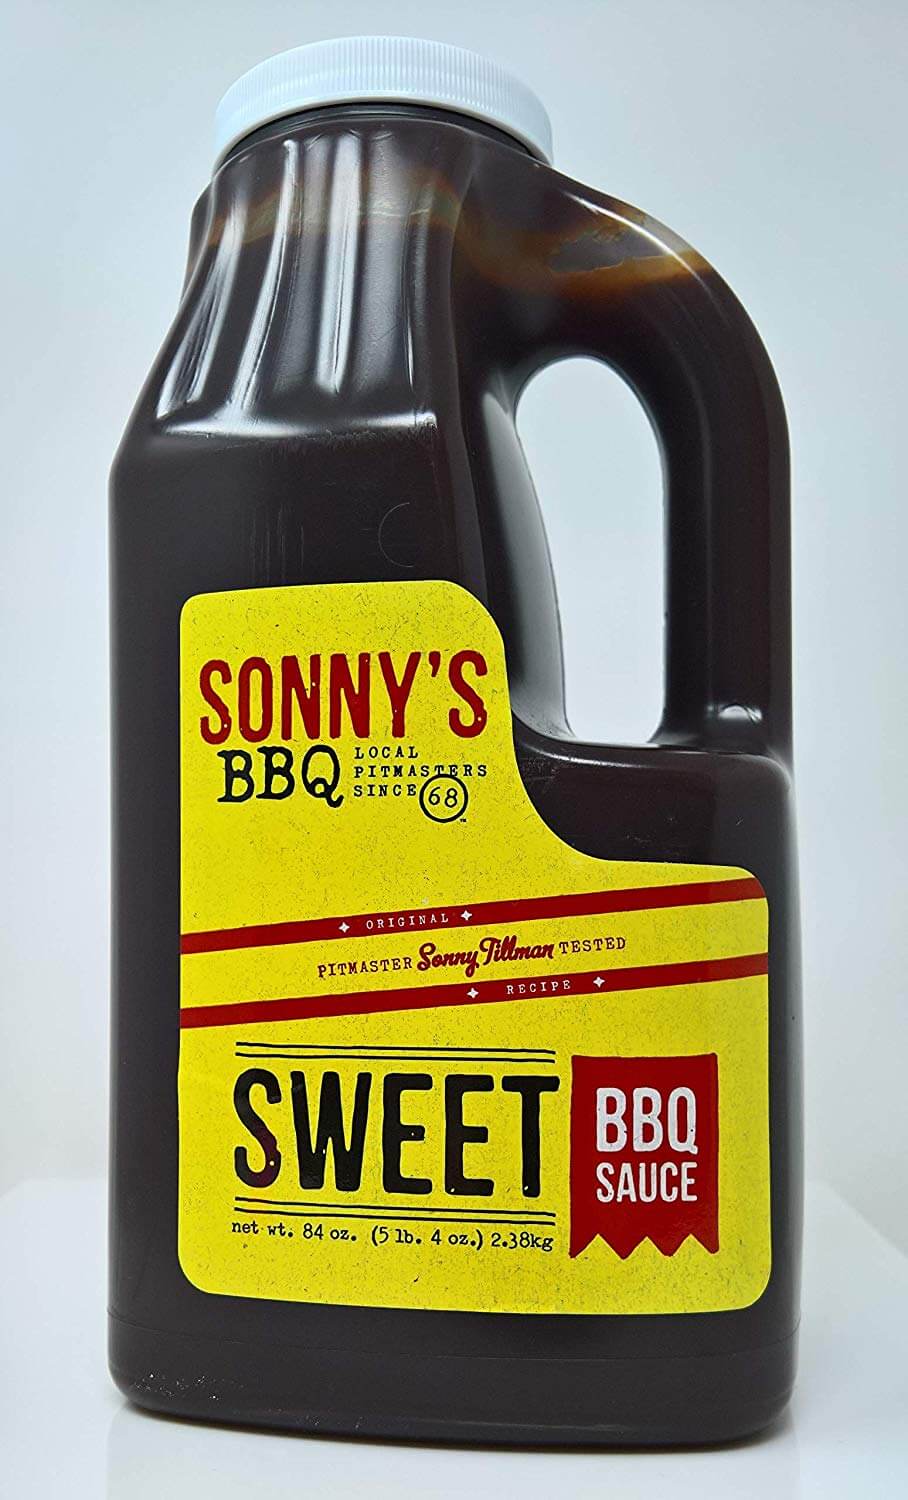 Sonny's Authentic Sweet Bar-B-Q Sauce